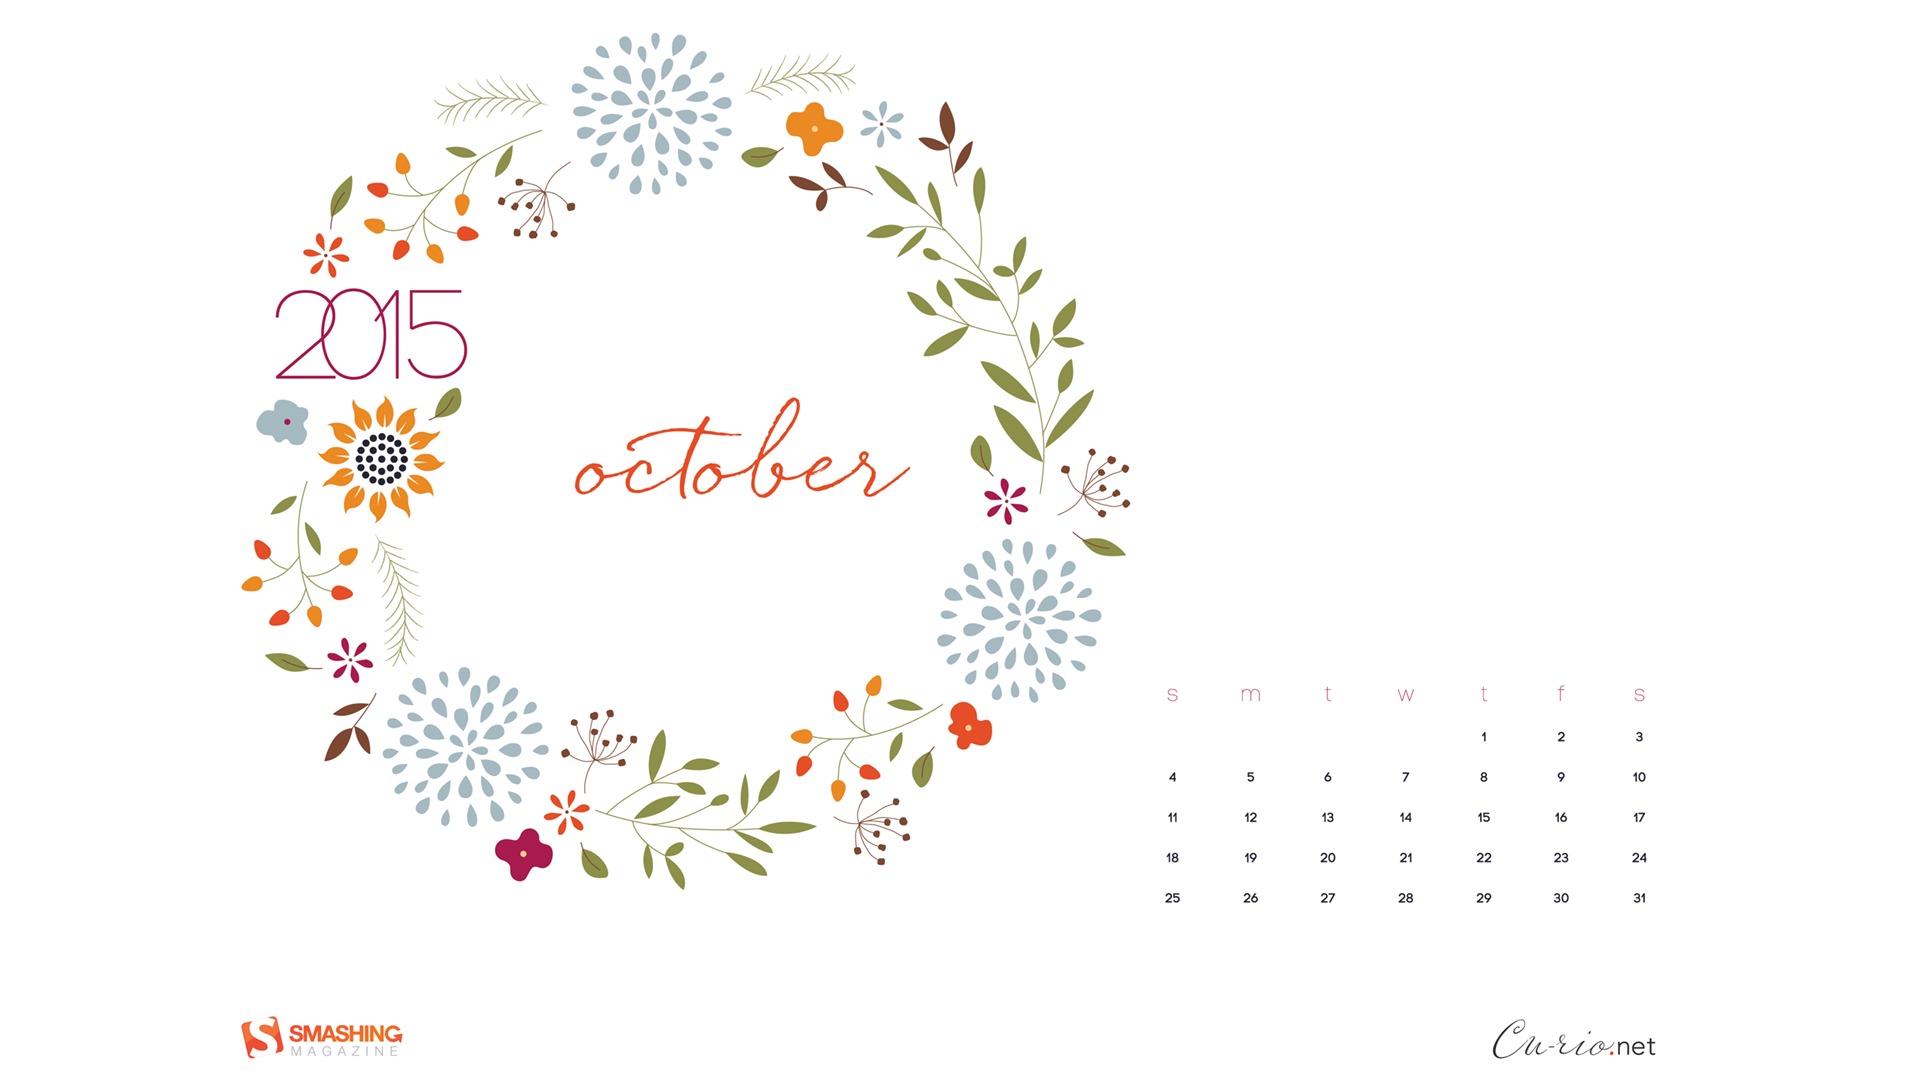 October 2015 calendar wallpaper (2) #11 - 1920x1080